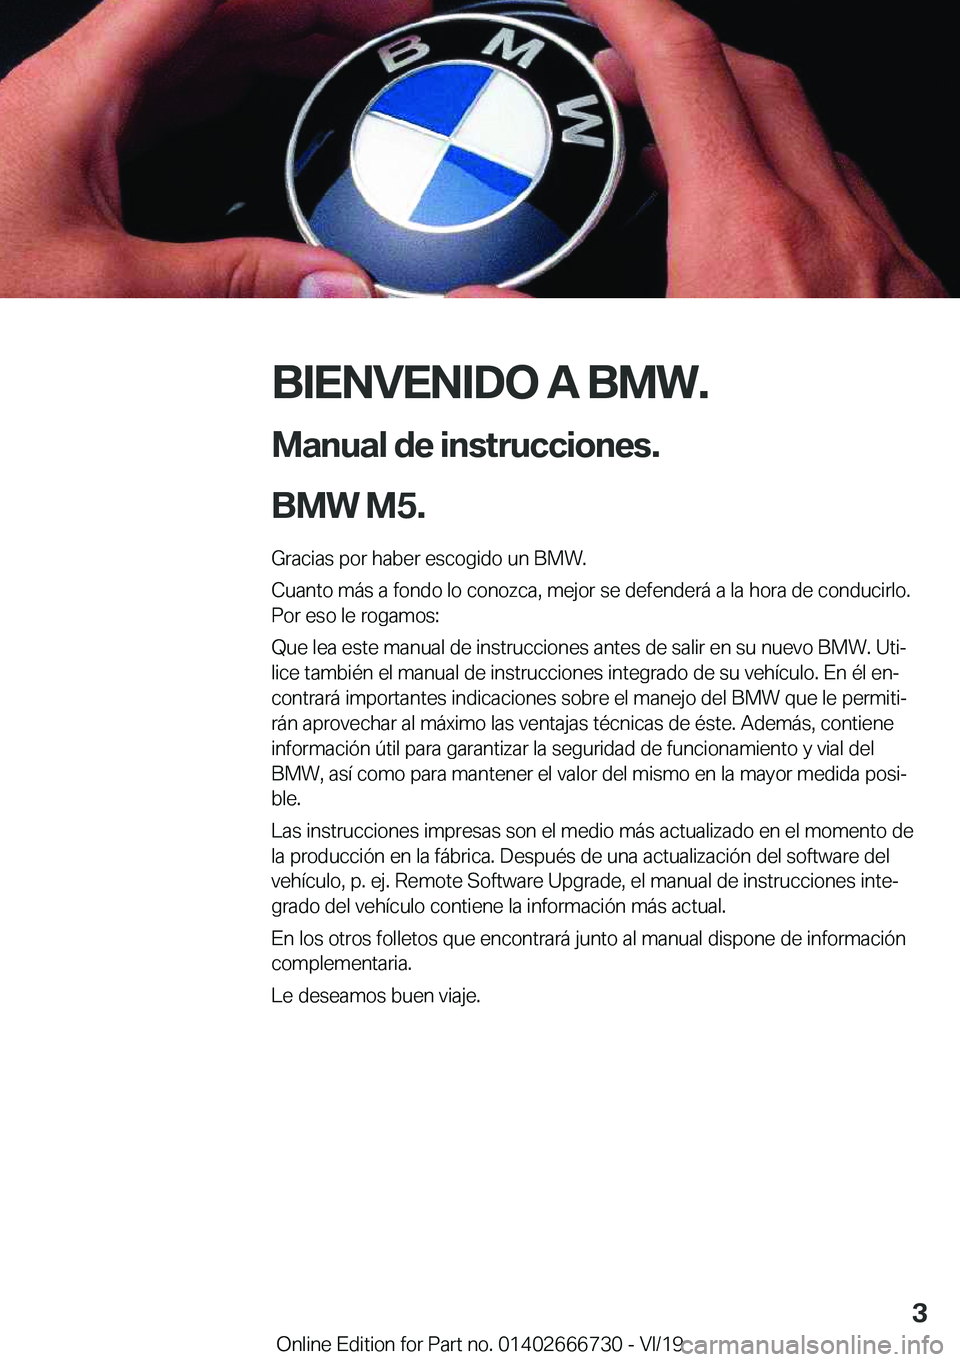 BMW M5 2020  Manuales de Empleo (in Spanish) �B�I�E�N�V�E�N�I�D�O��A��B�M�W�.
�M�a�n�u�a�l��d�e��i�n�s�t�r�u�c�c�i�o�n�e�s�.
�B�M�W��M�5�. �G�r�a�c�i�a�s��p�o�r��h�a�b�e�r��e�s�c�o�g�i�d�o��u�n��B�M�W�.
�C�u�a�n�t�o��m�